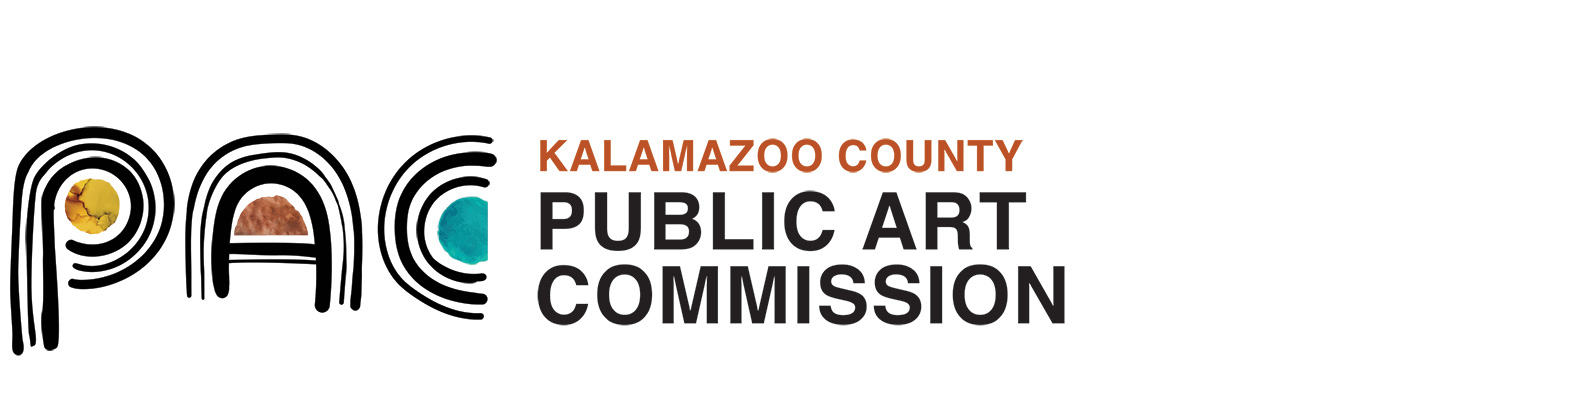 Kalamazoo County Public Art Commission